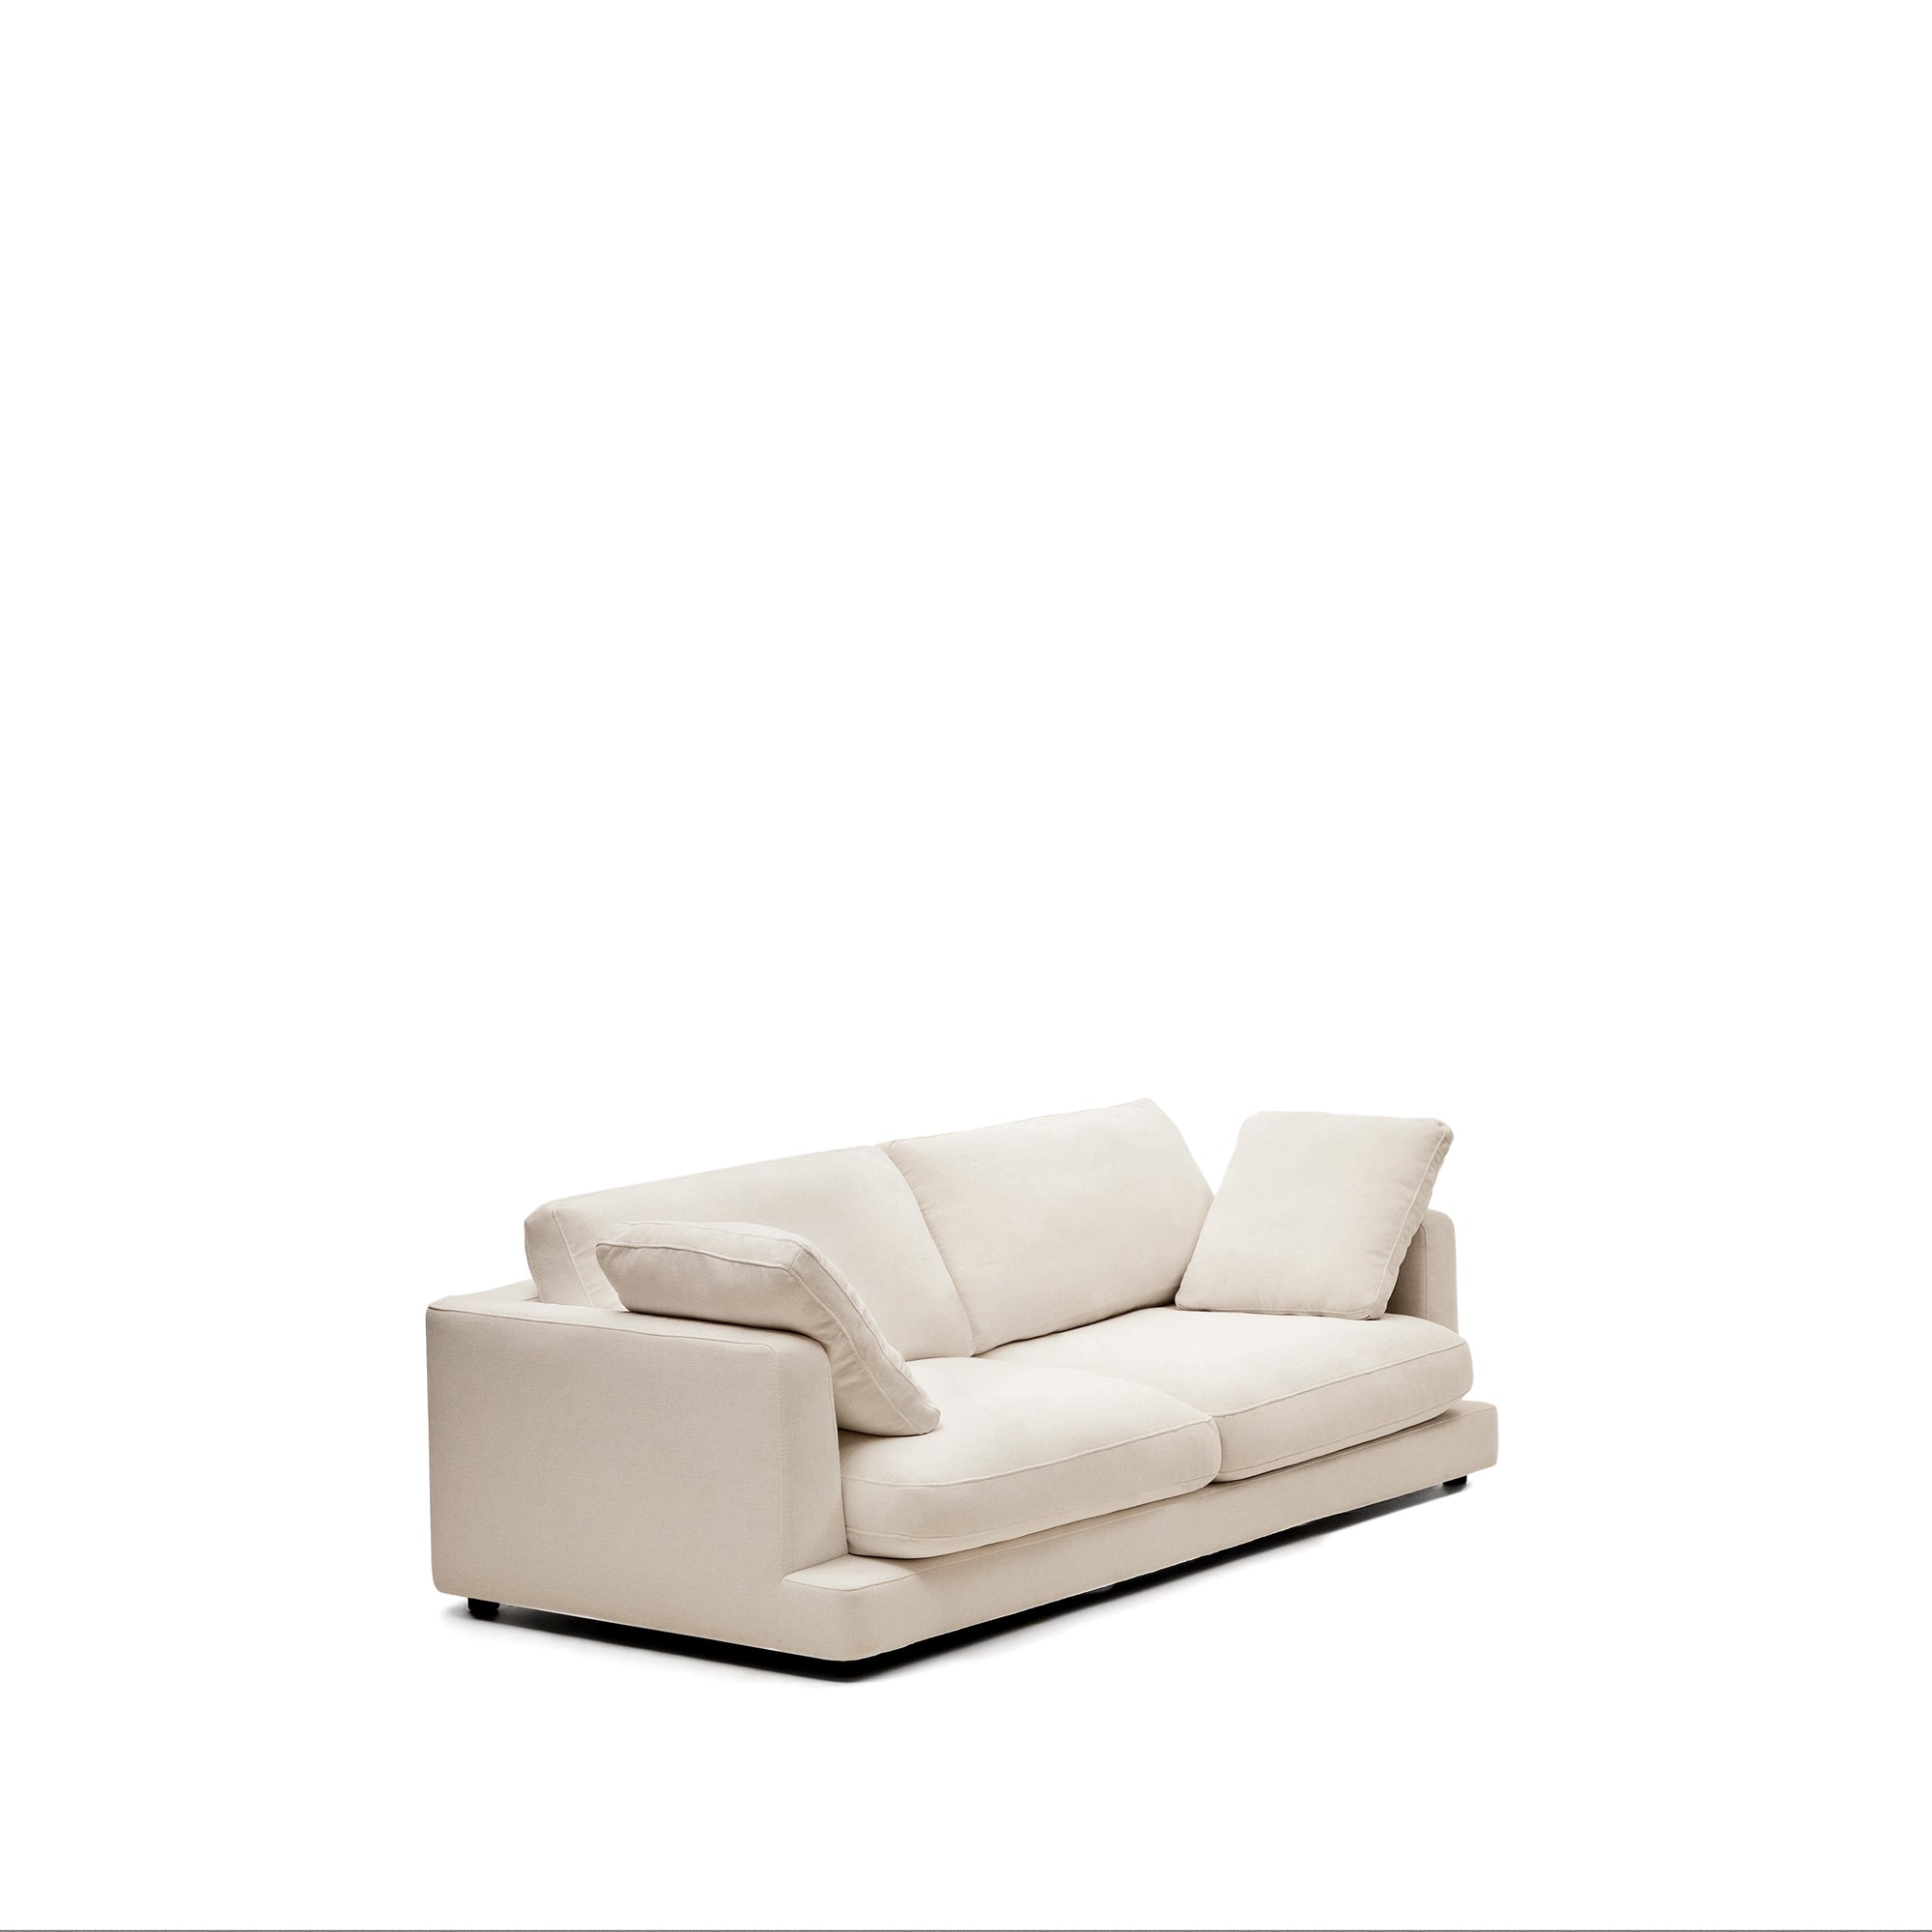 Gala 3 seater sofa in beige, 210 cm